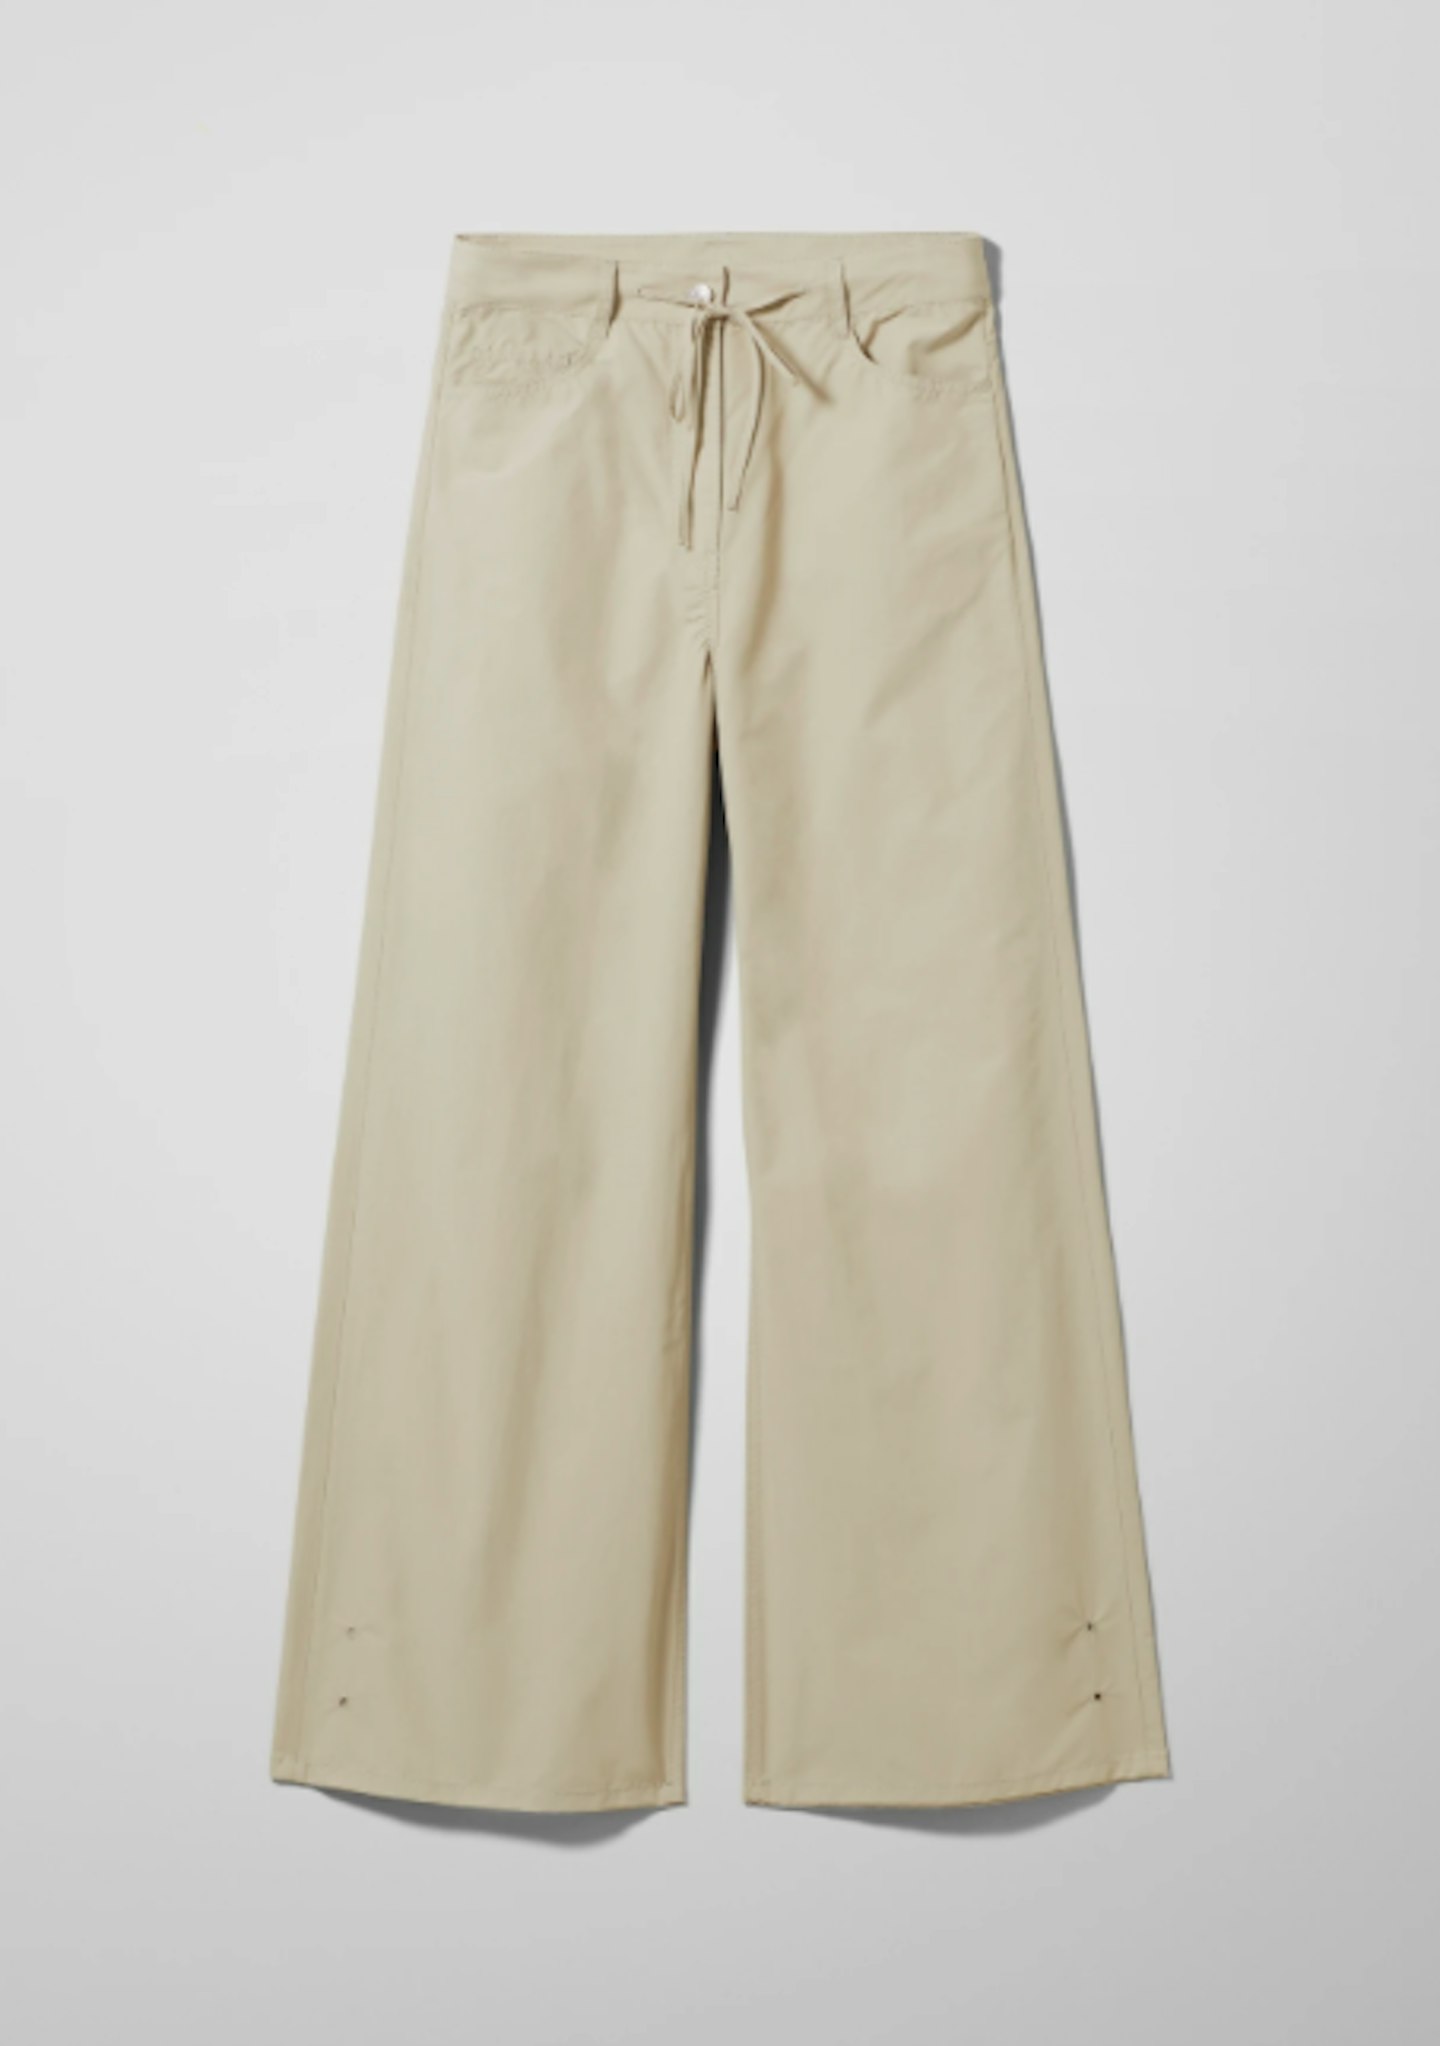 Weekday, Iris Cotton Trousers, £45